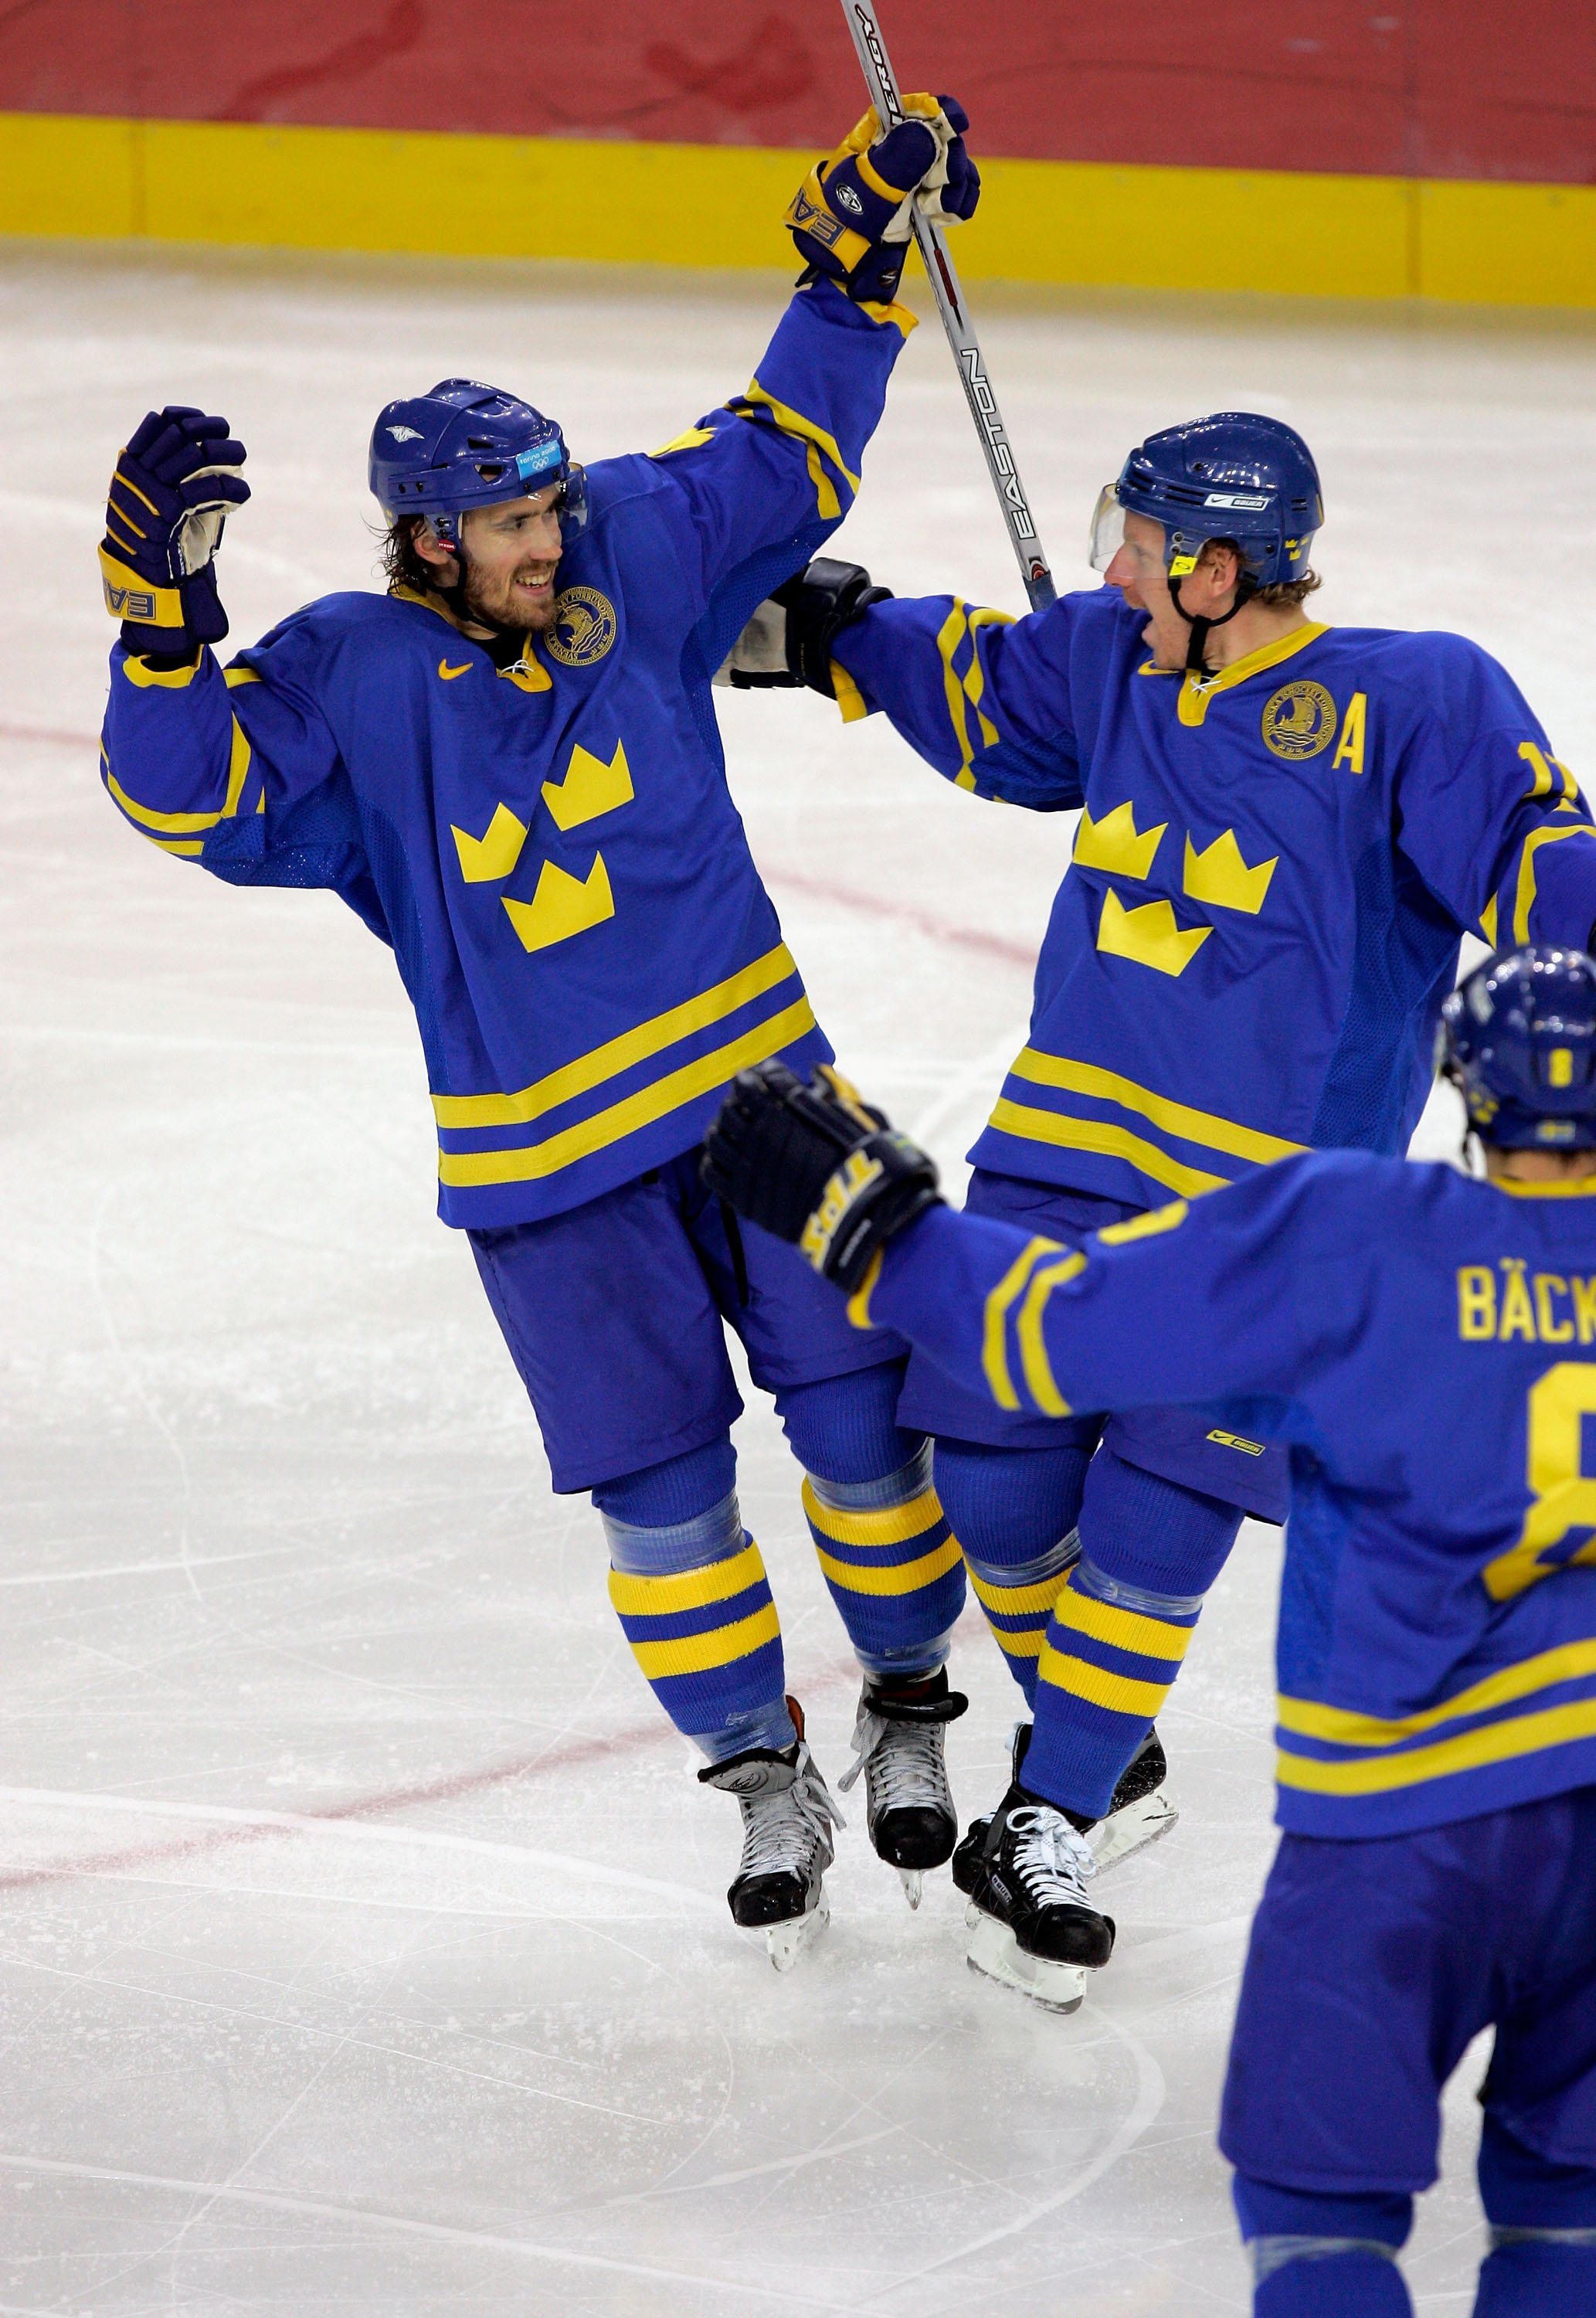 swedish ice hockey jersey